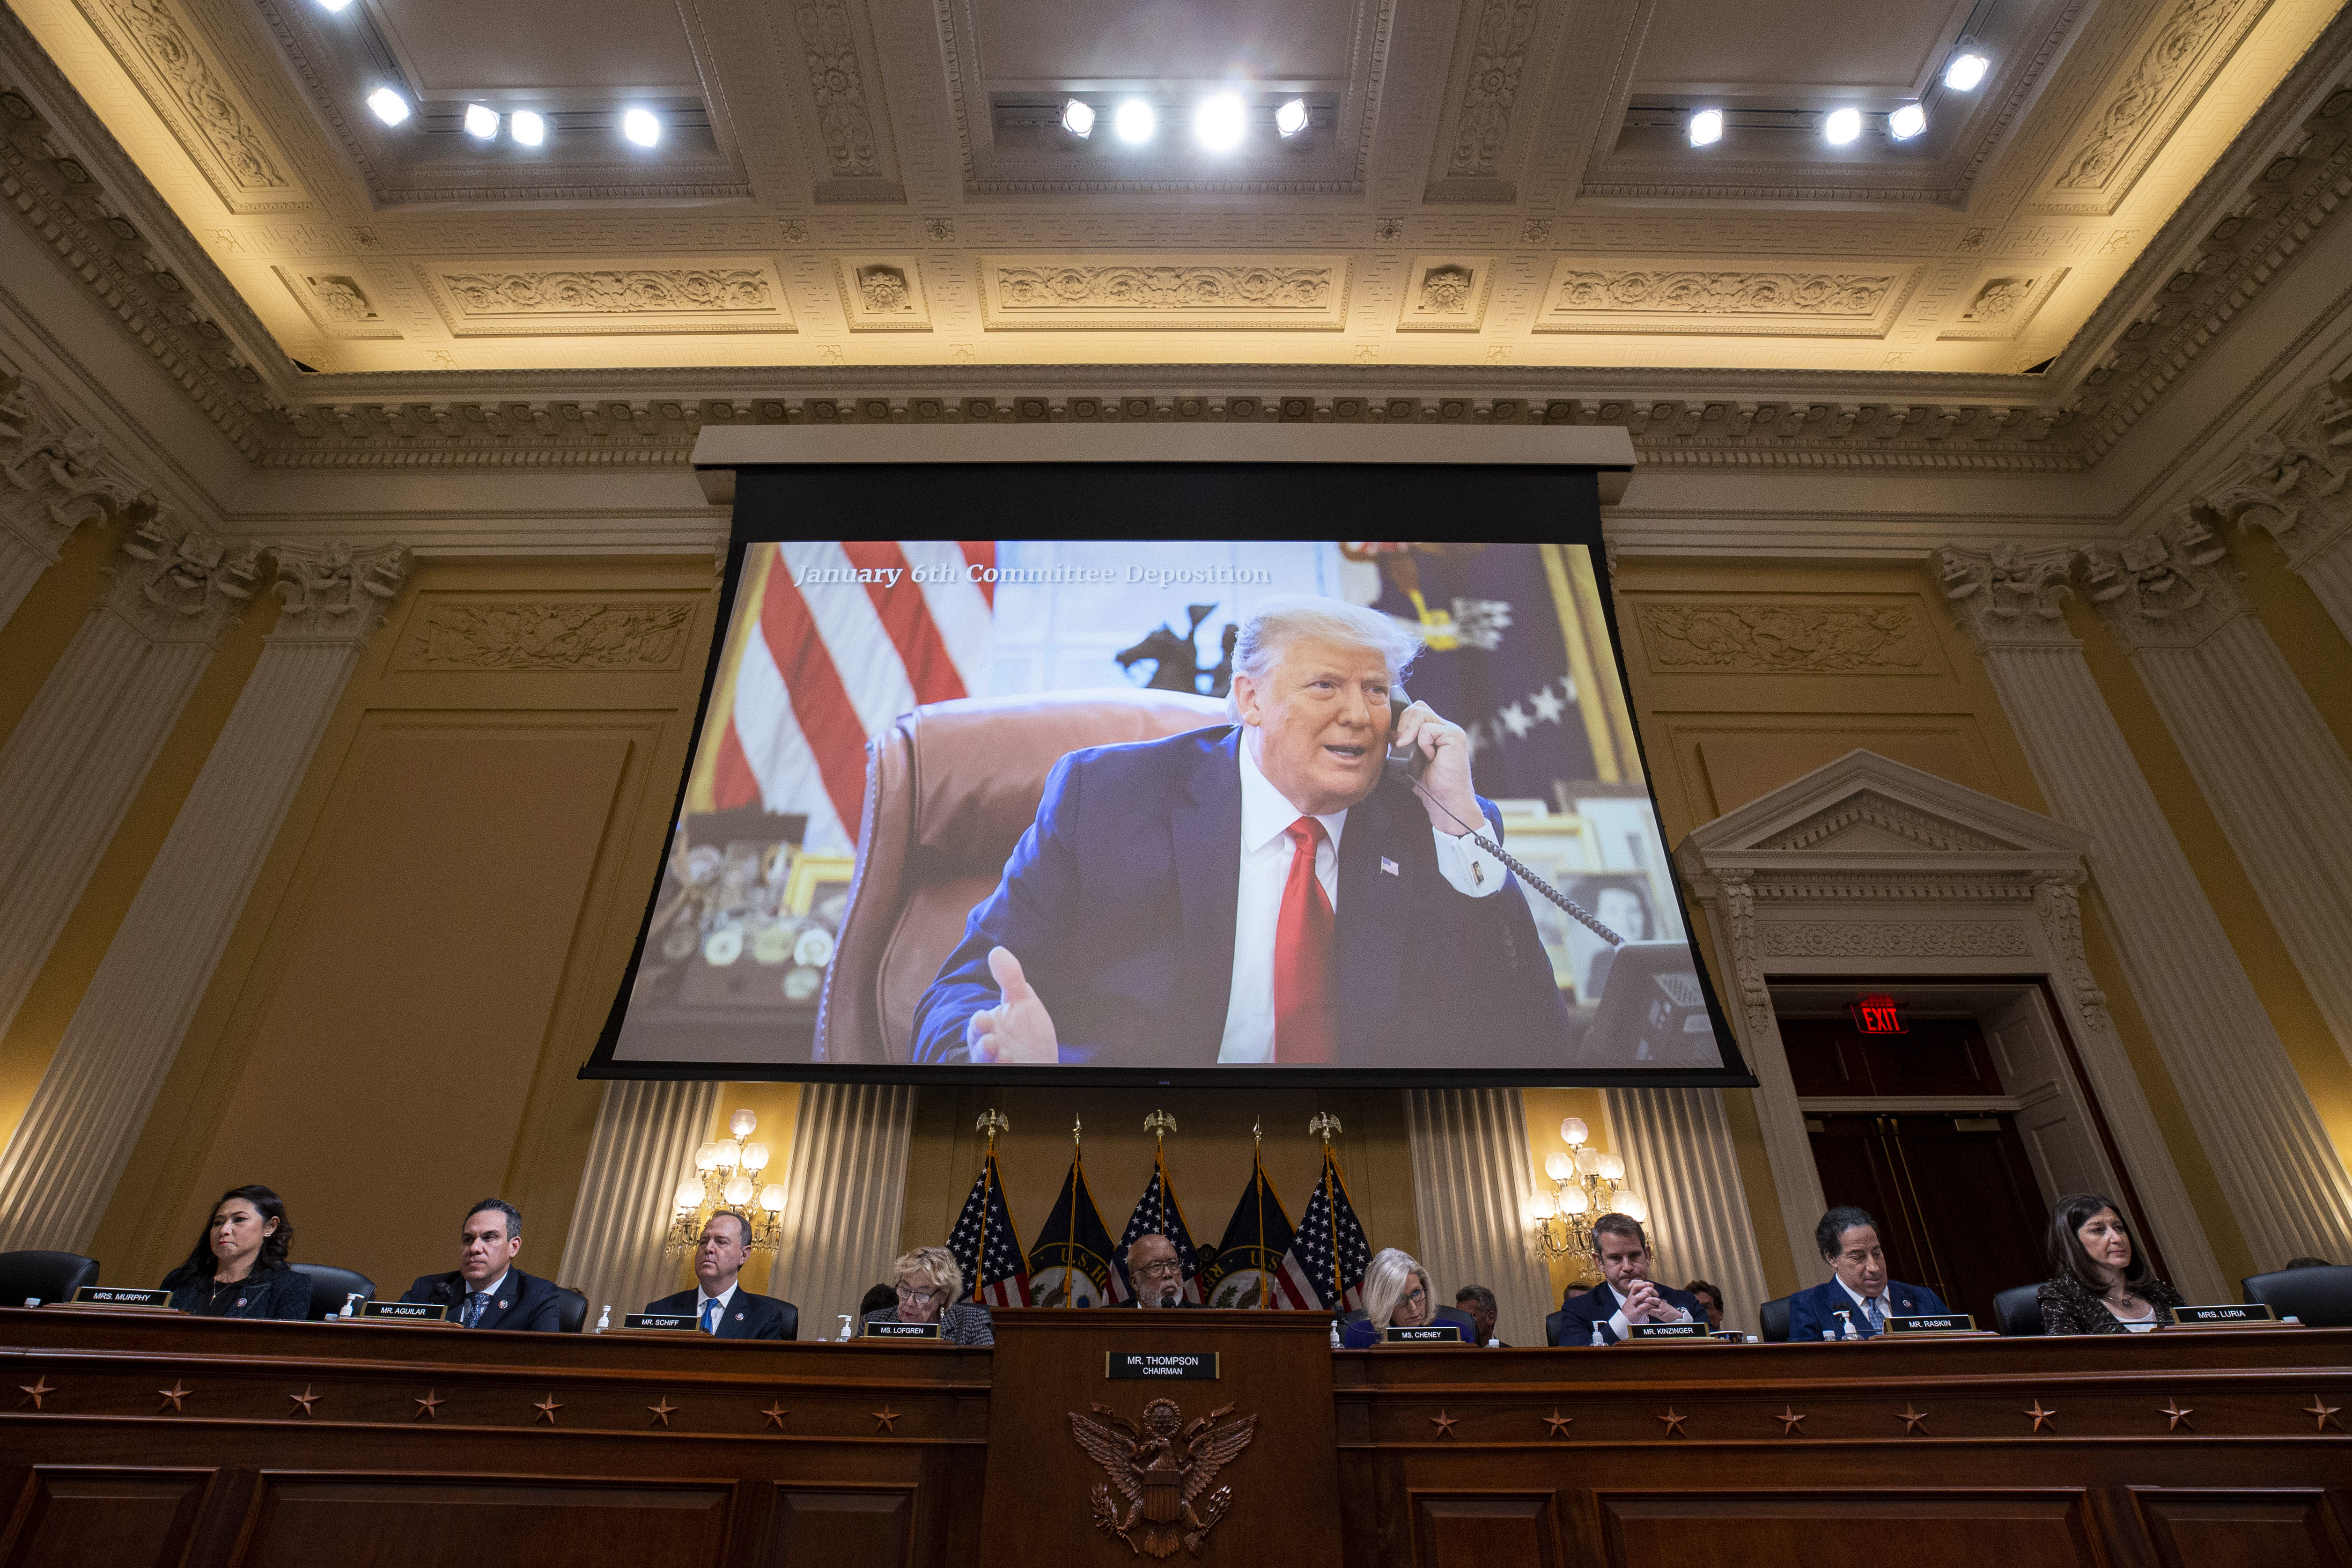 January 6 committee members display photo of Donald Trump